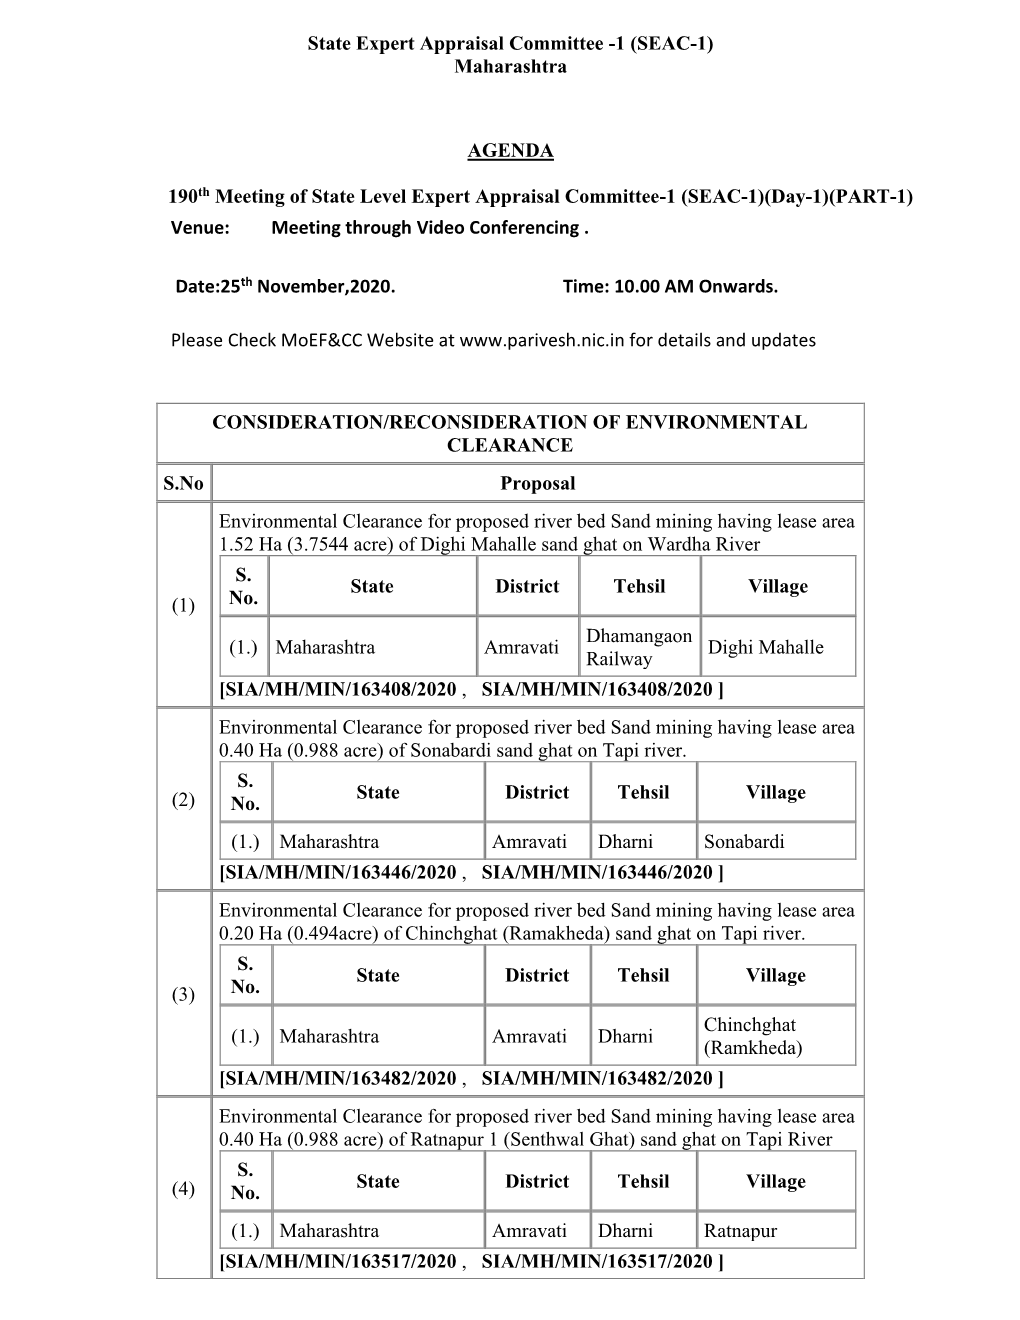 Maharashtra AGENDA 190Th Meeting of State Level Expert Appraisal